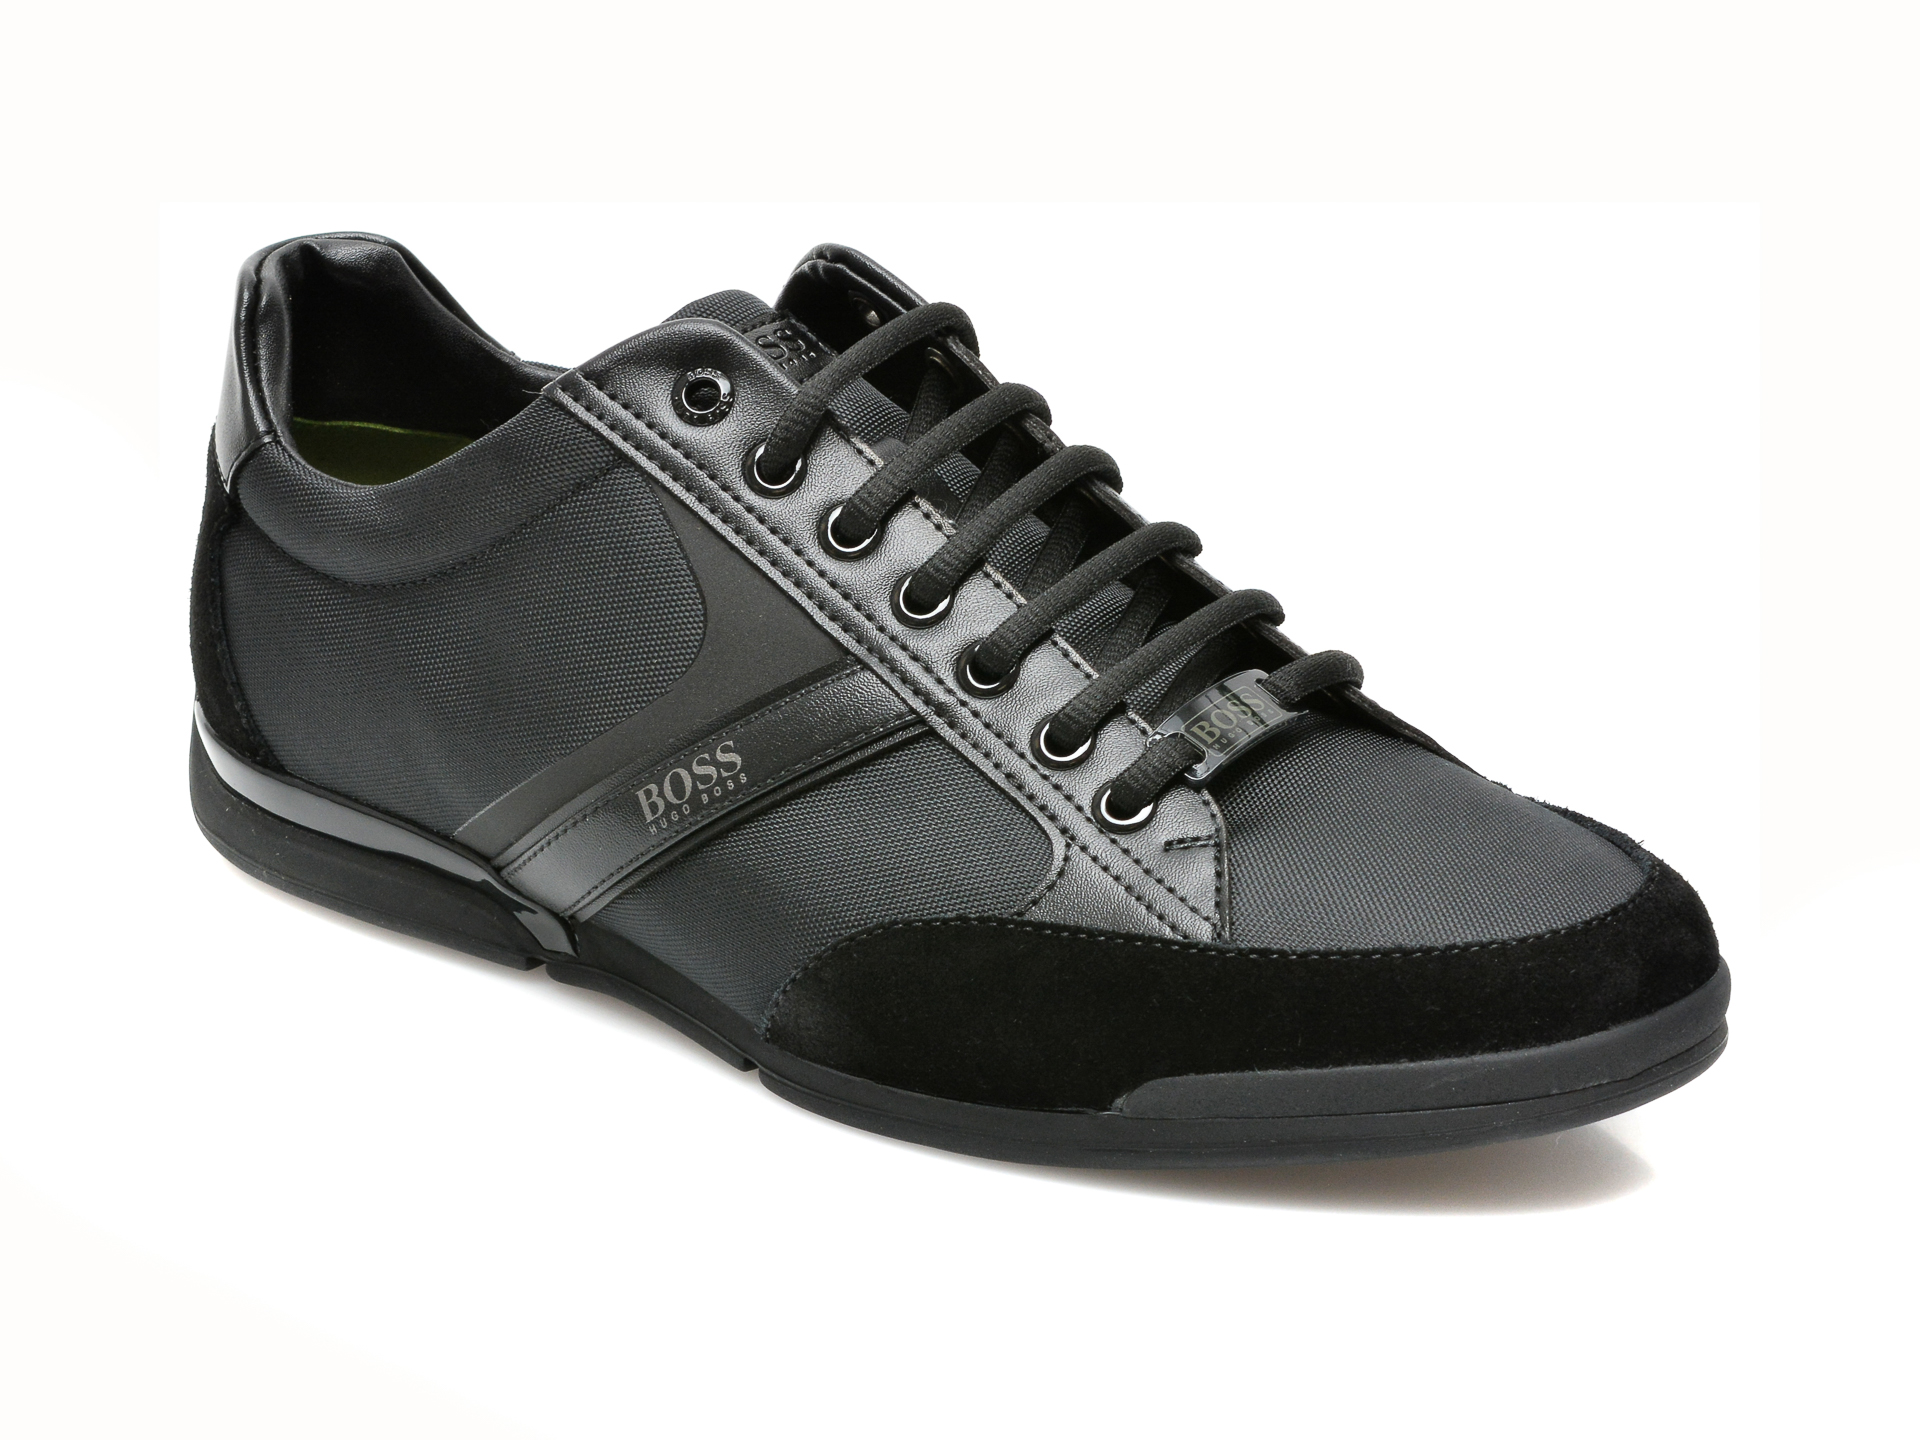 Pantofi sport HUGO BOSS negri, 7672, din material textil si piele ecologica Hugo Boss imagine 2022 13clothing.ro